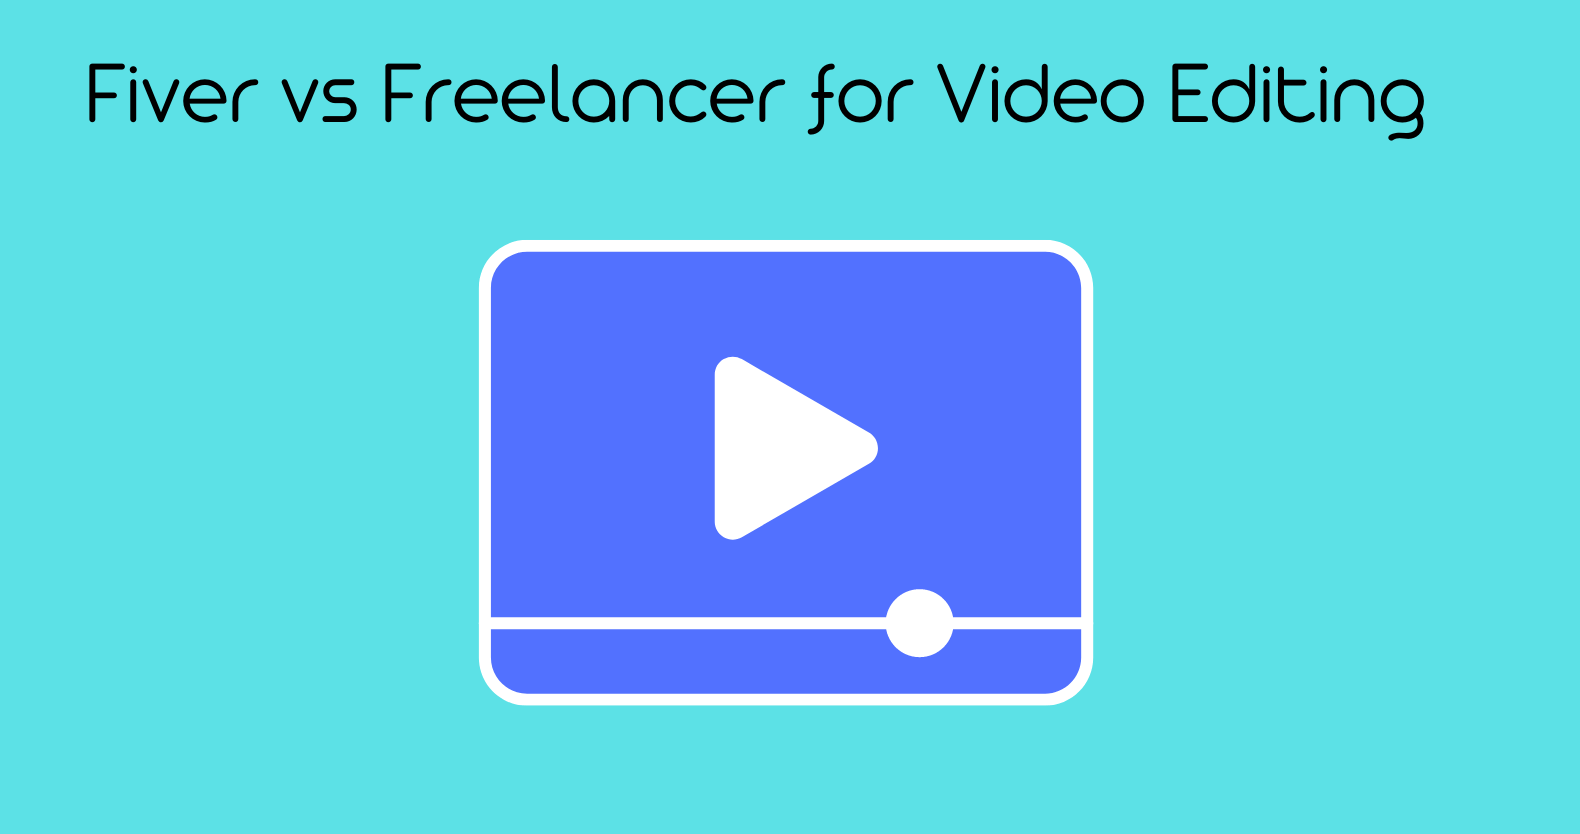 Fiver vs Freelancer for Video Editing